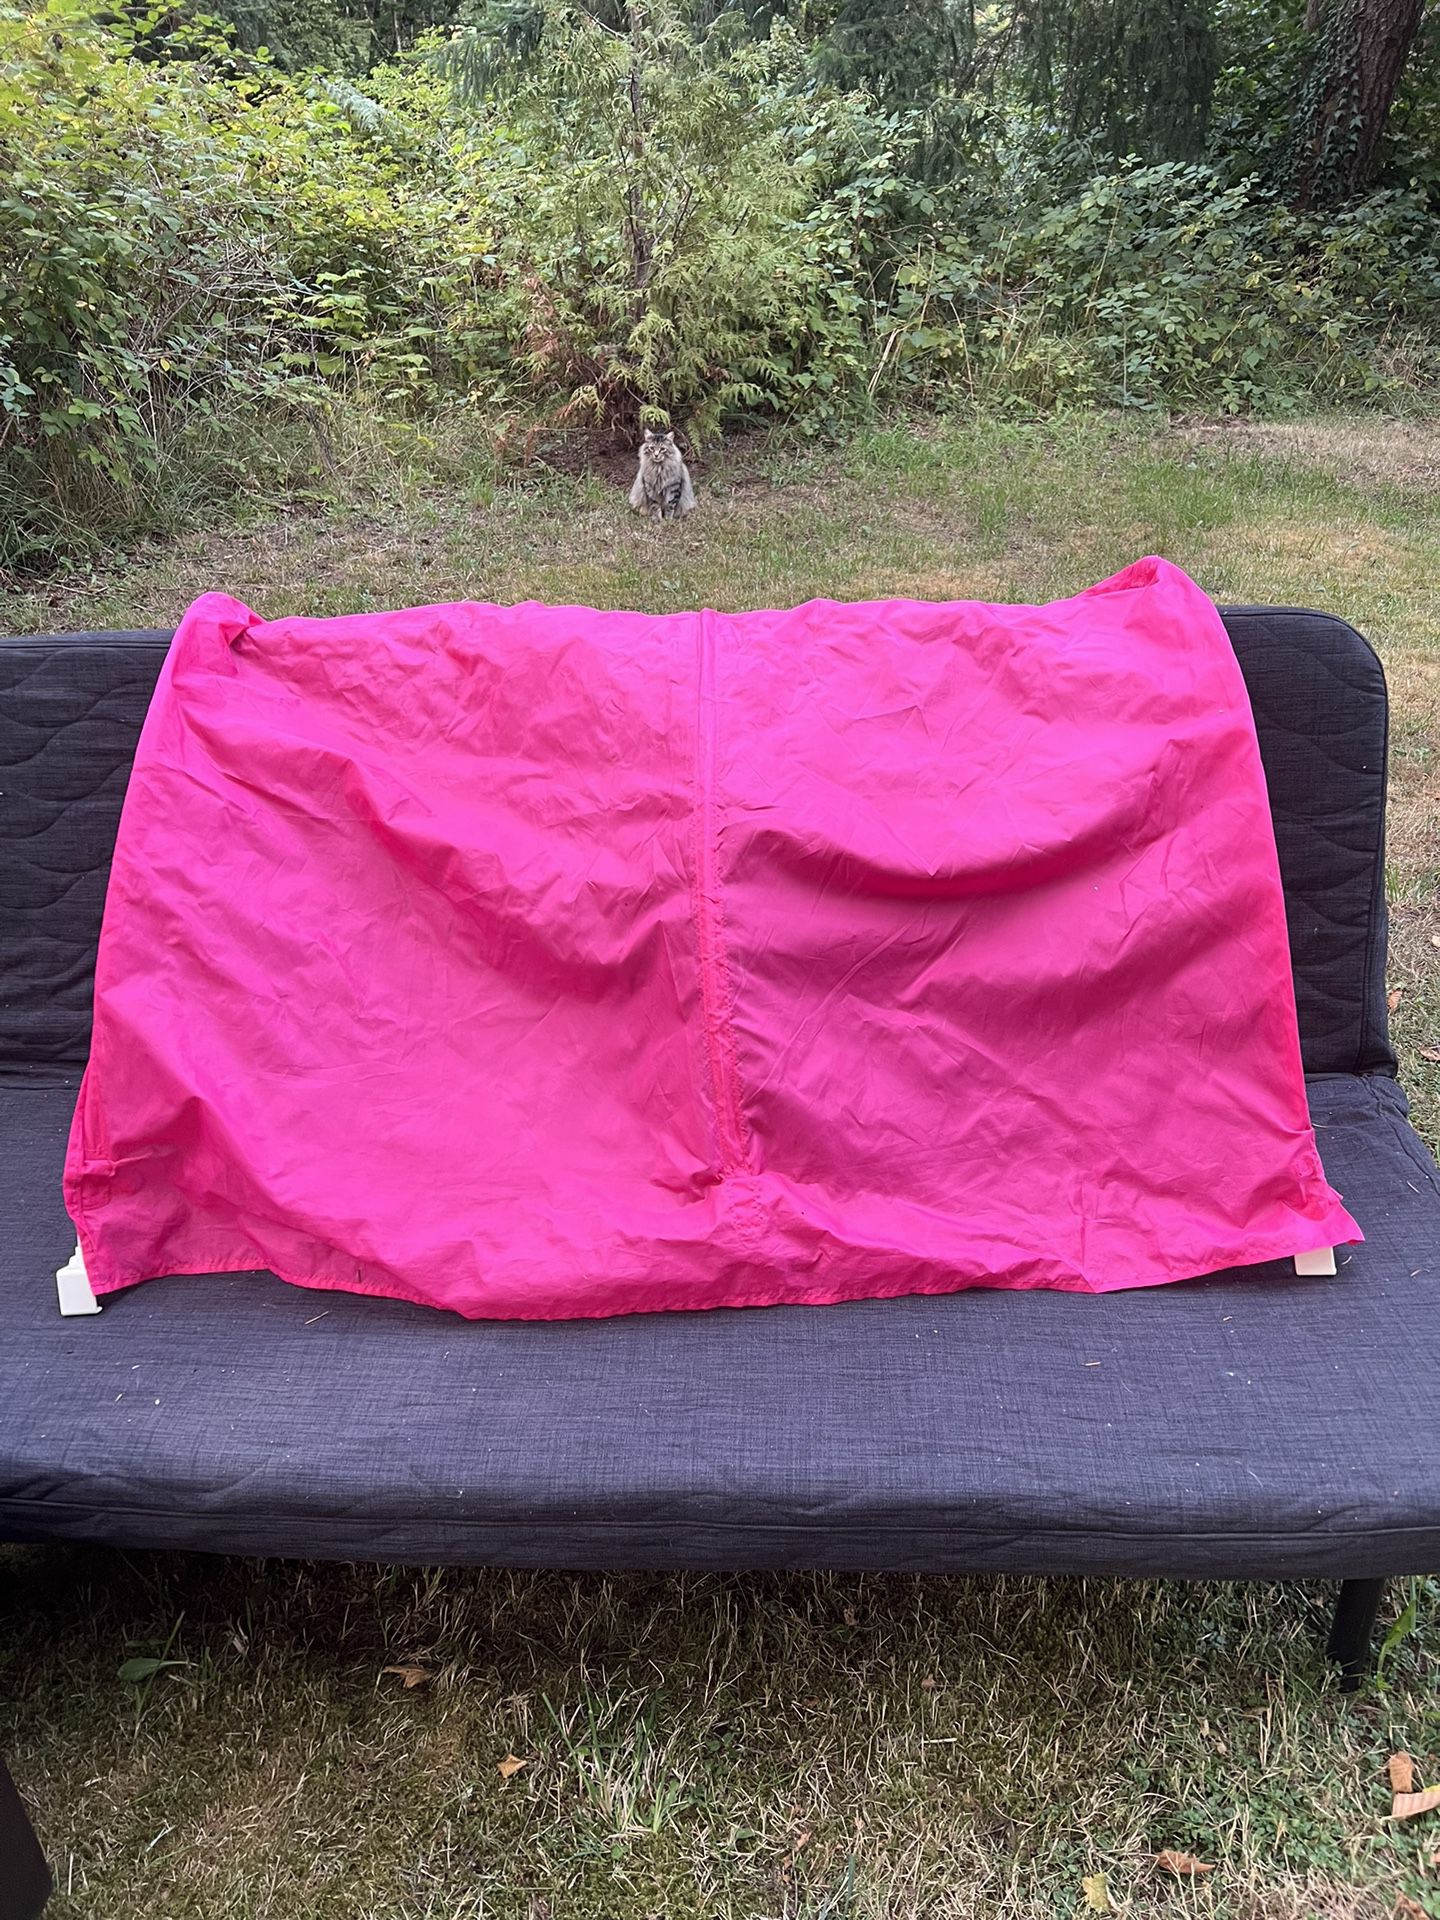 FREE Pink IKEA KURA Bed Tent